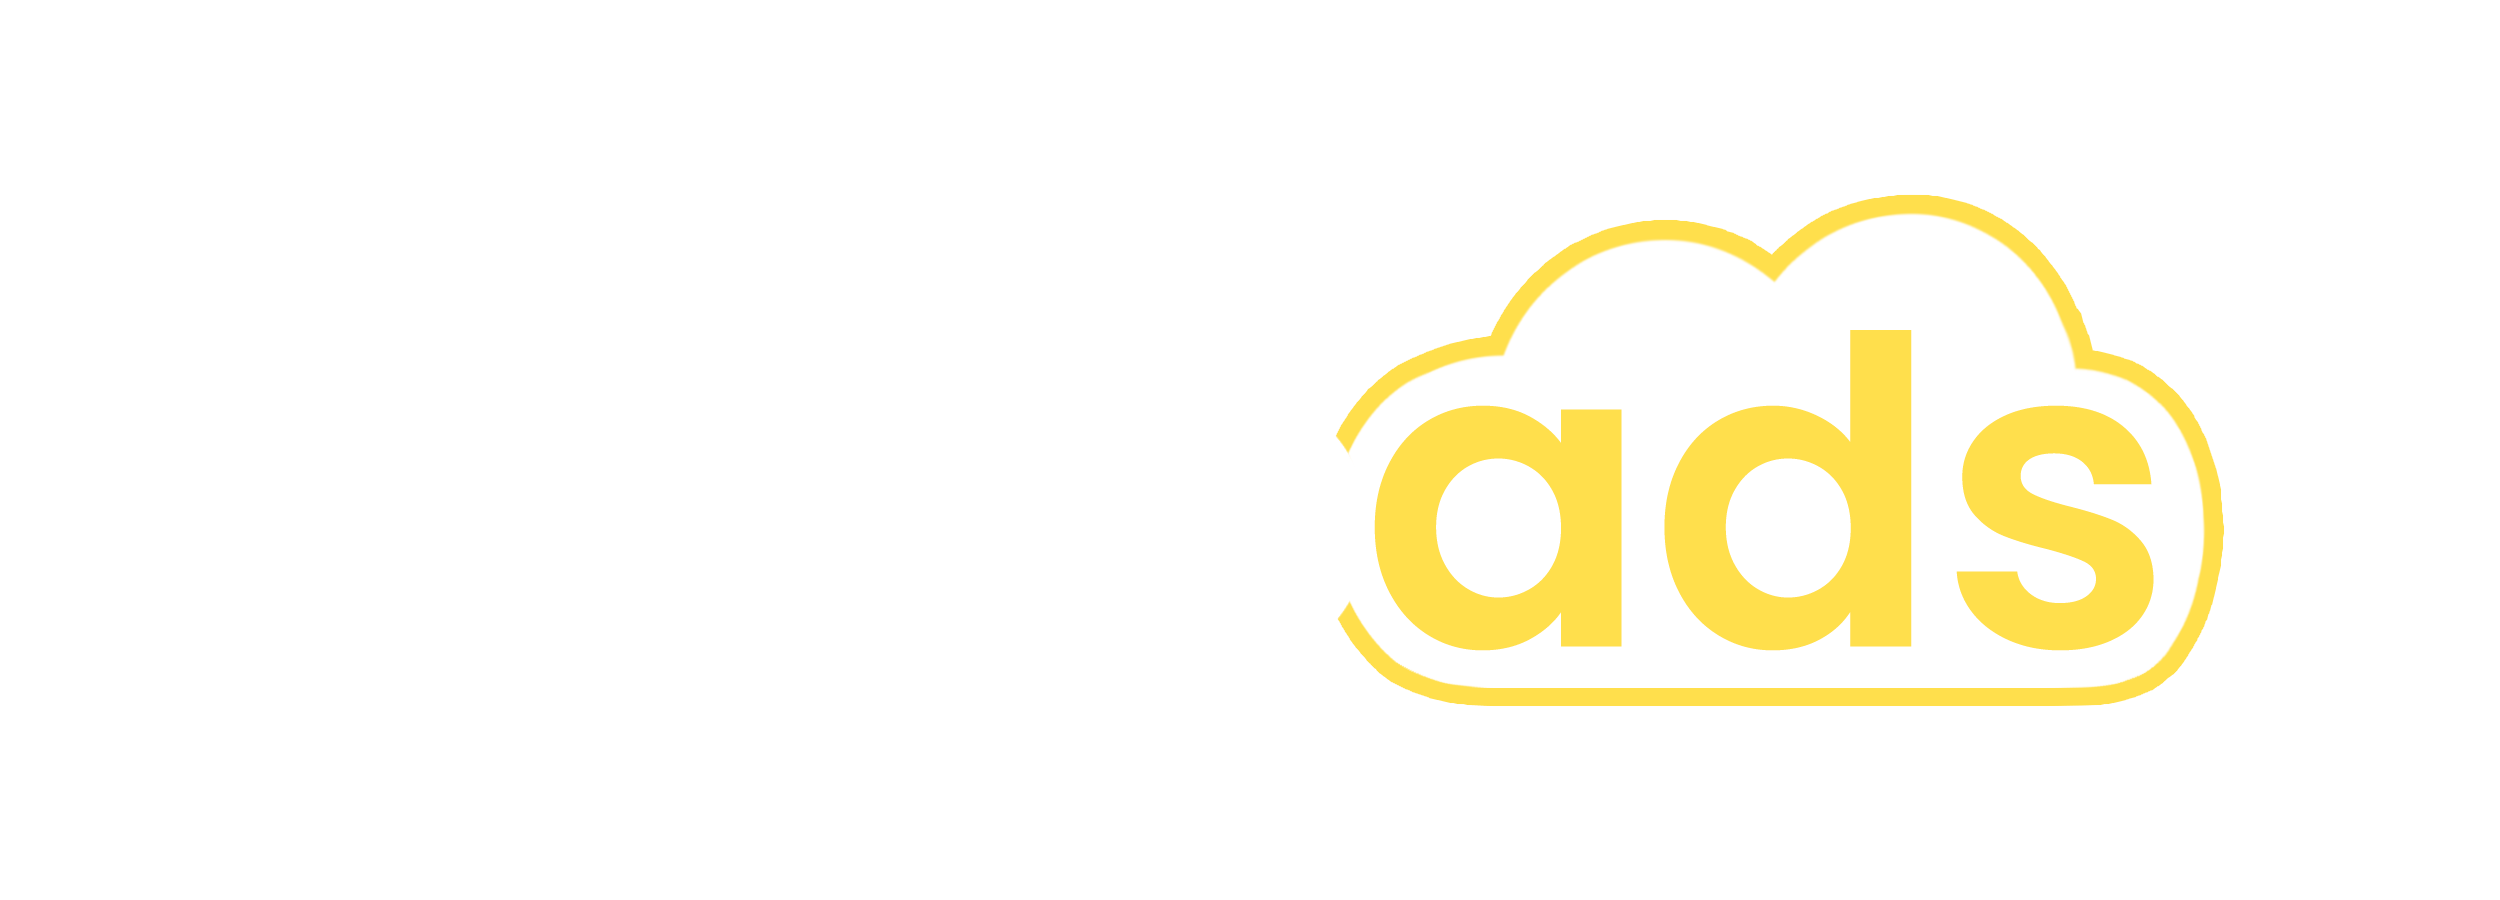 logo-nubeads-1